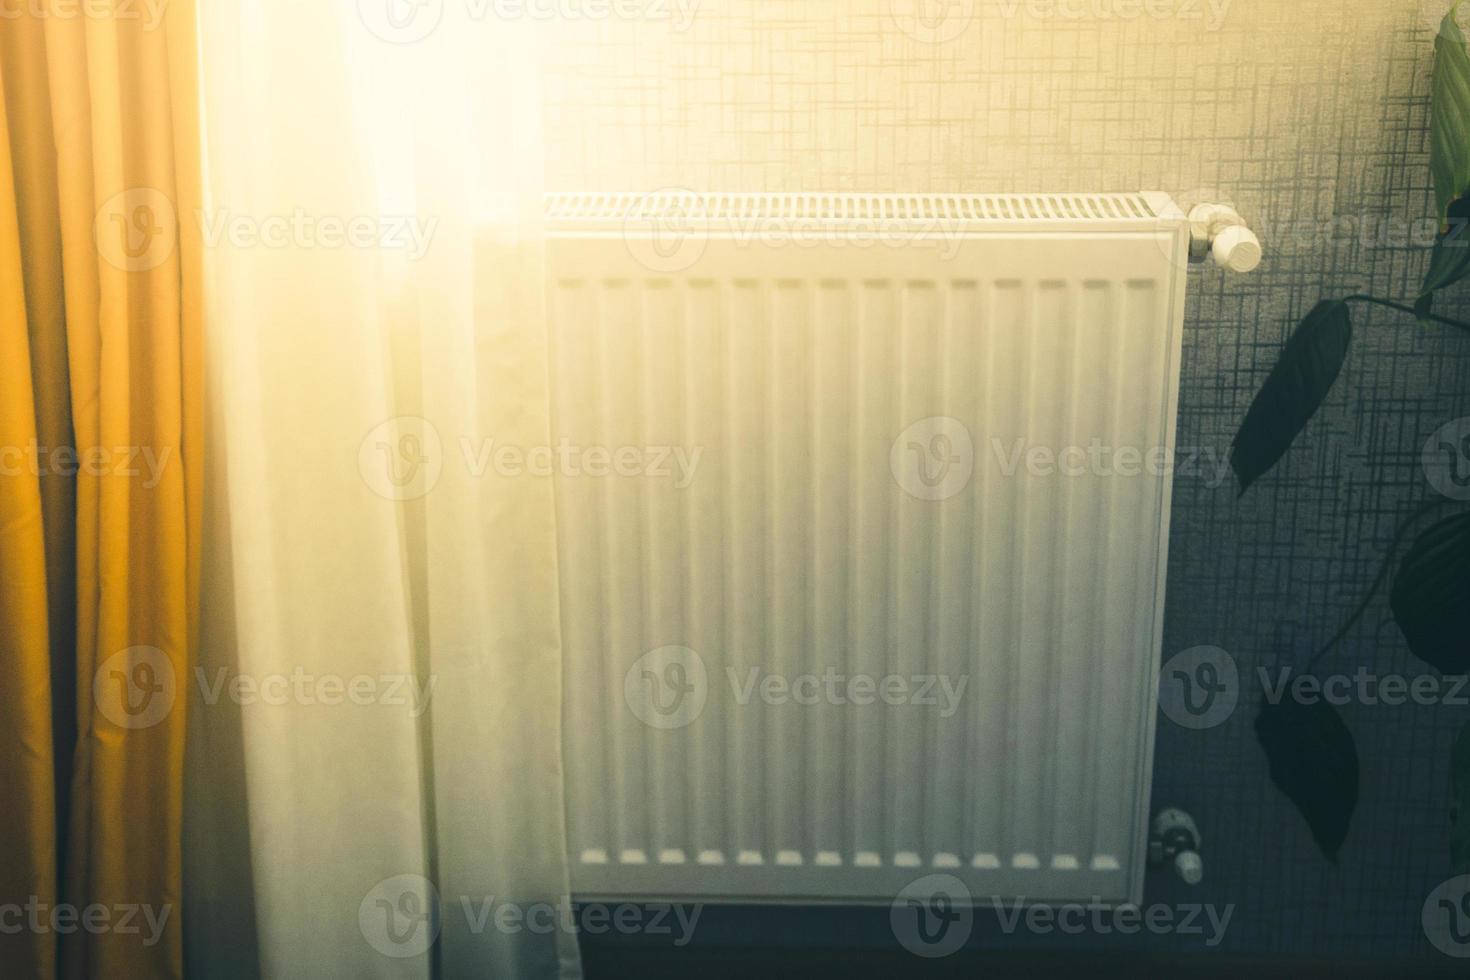 radiador blanco con válvula de control de temperatura calefacción central en edificios modernos por ventana. foto